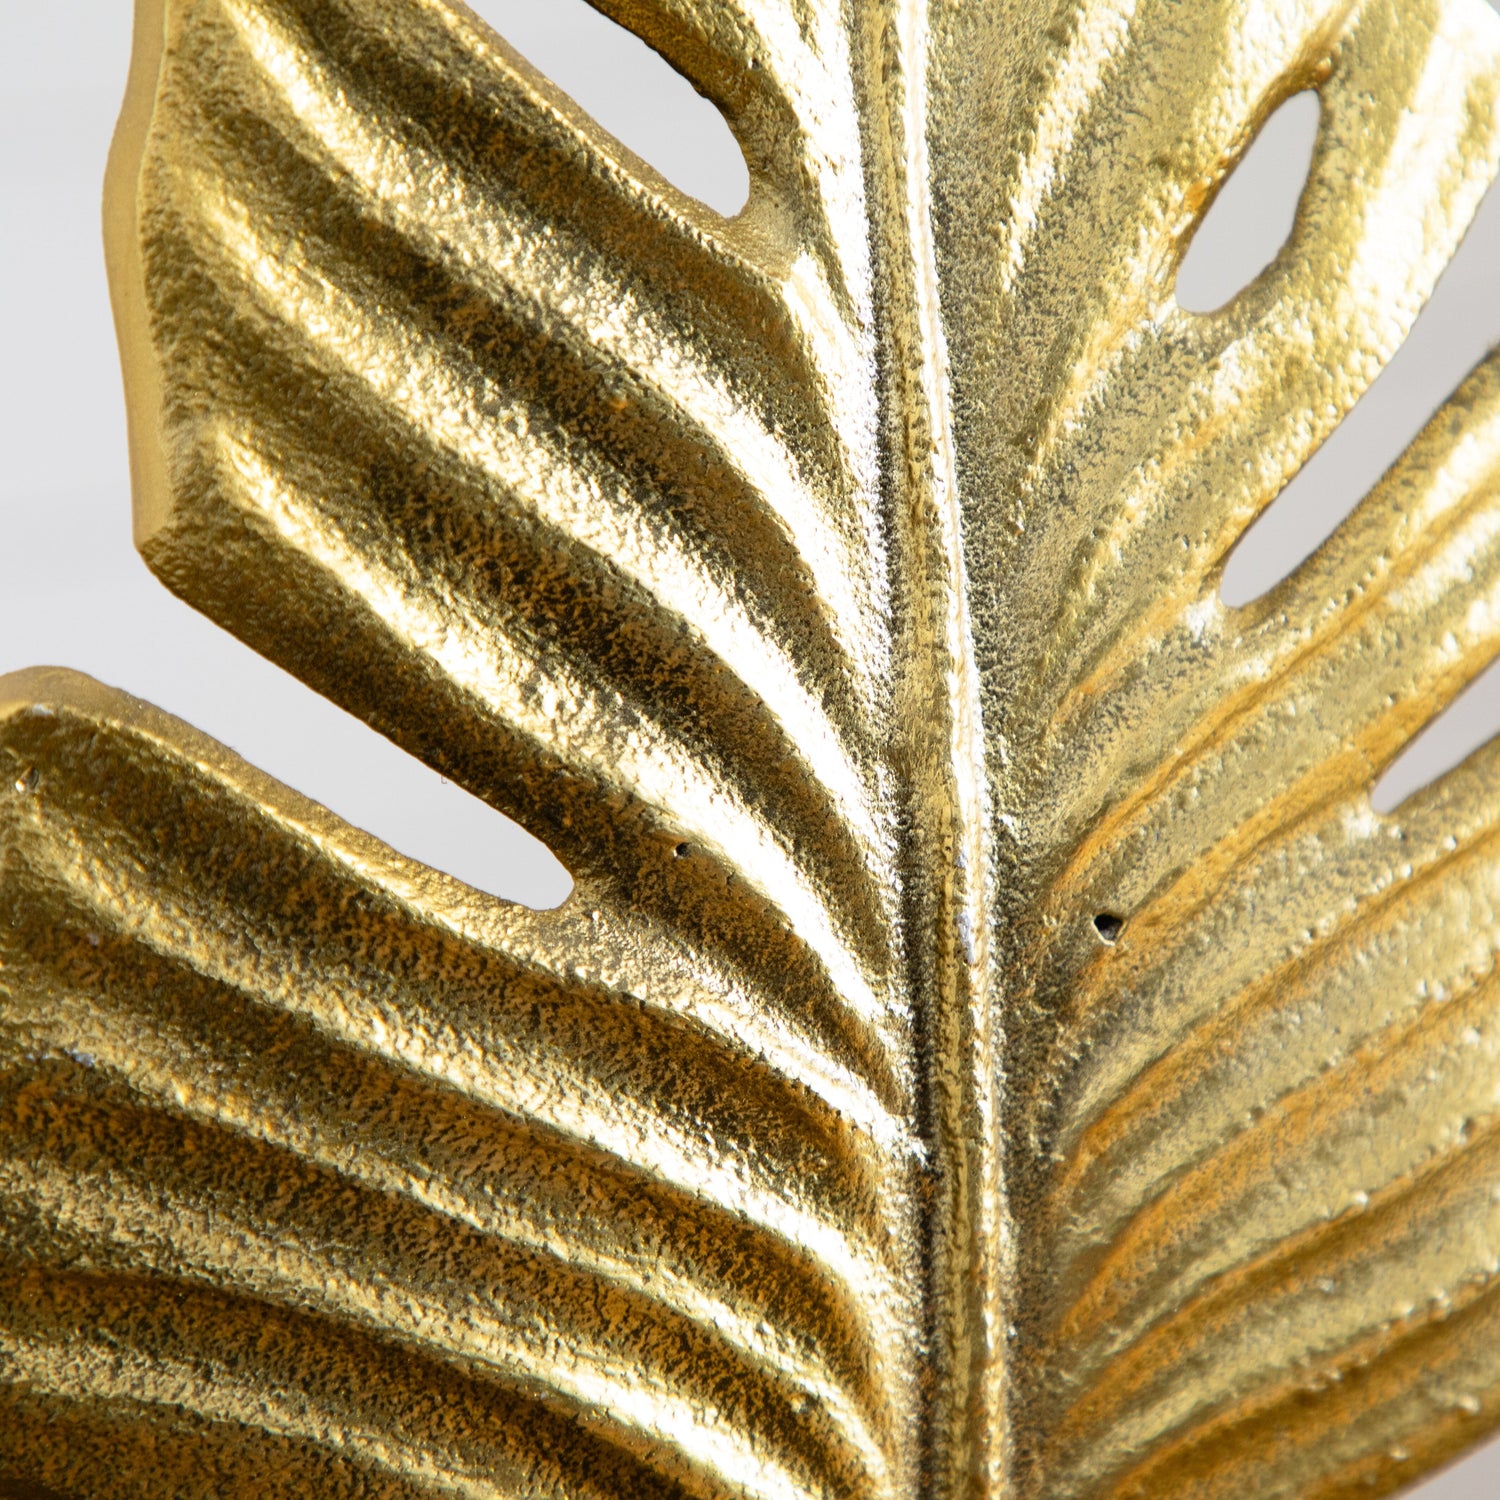 15.5” Golden Leaf Decorative Accent